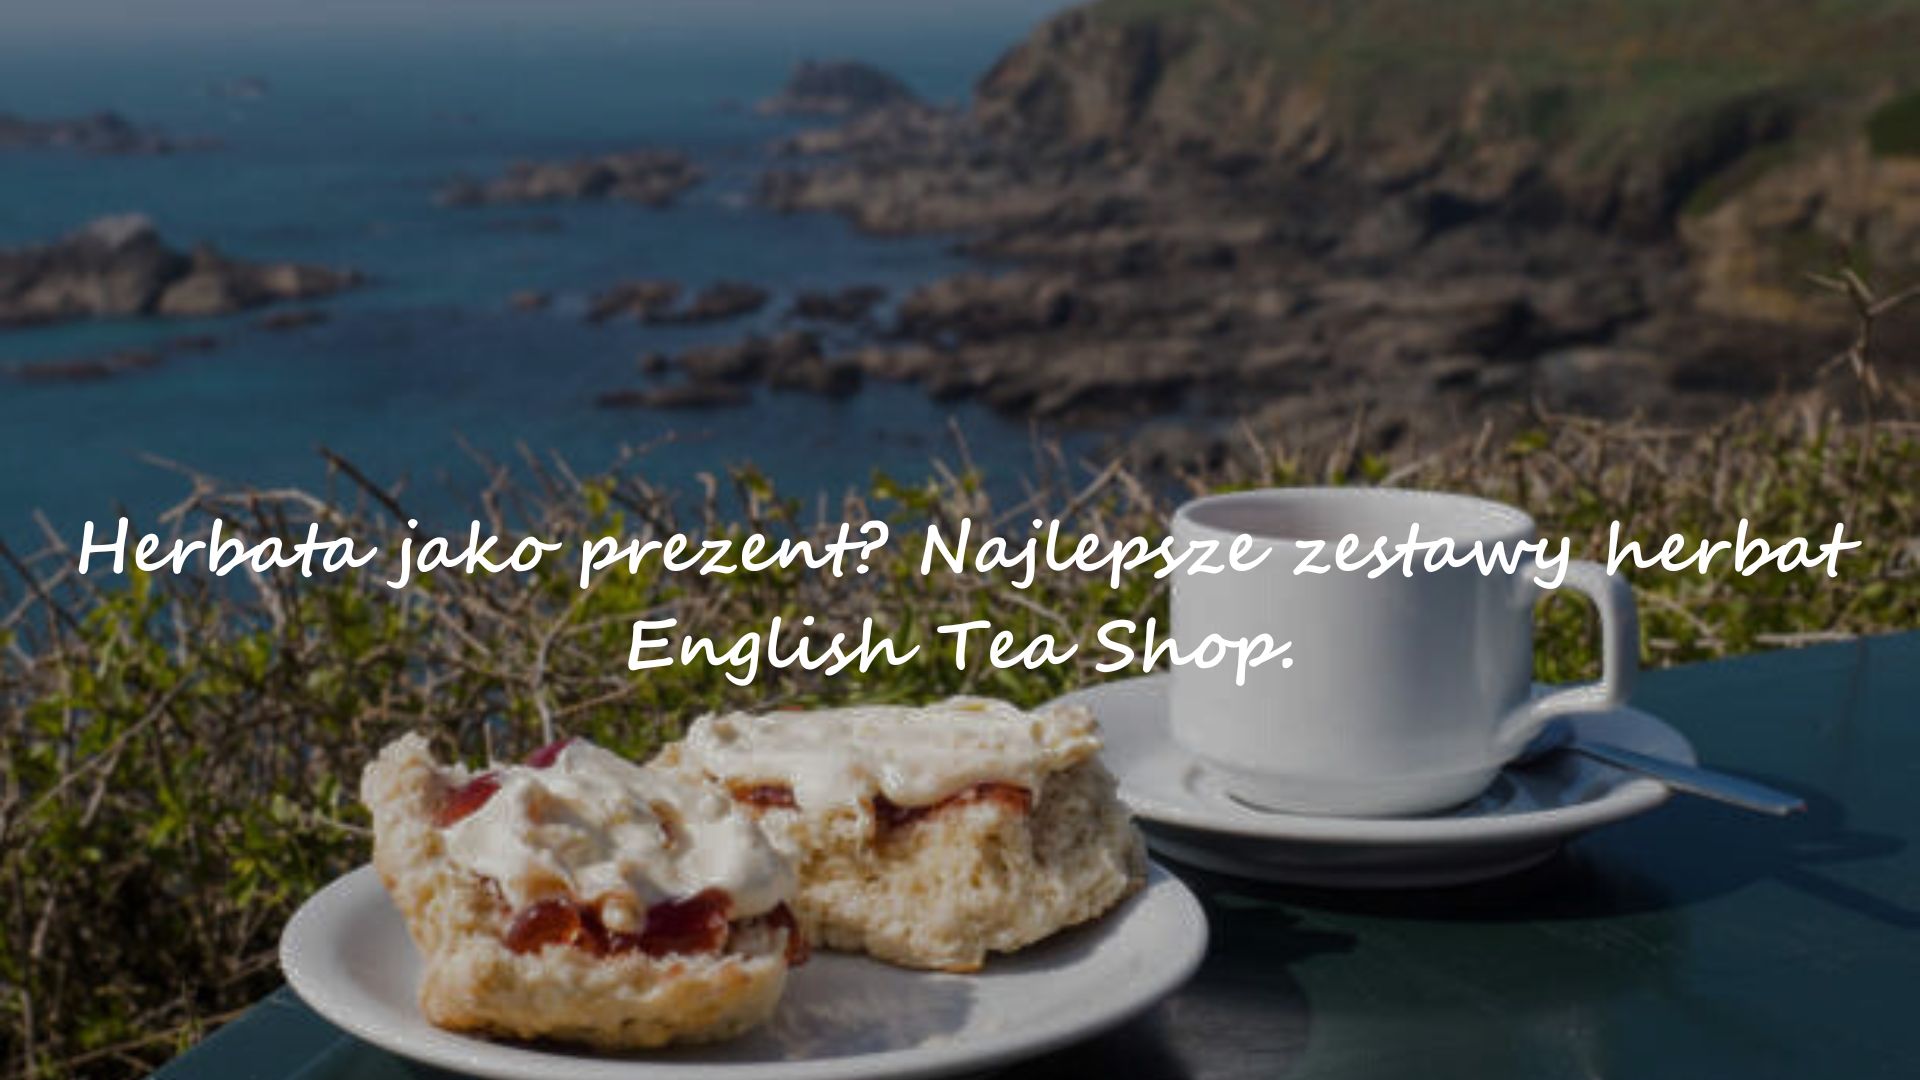 Herbata jako prezent? Najlepsze zestawy herbat English Tea Shop.